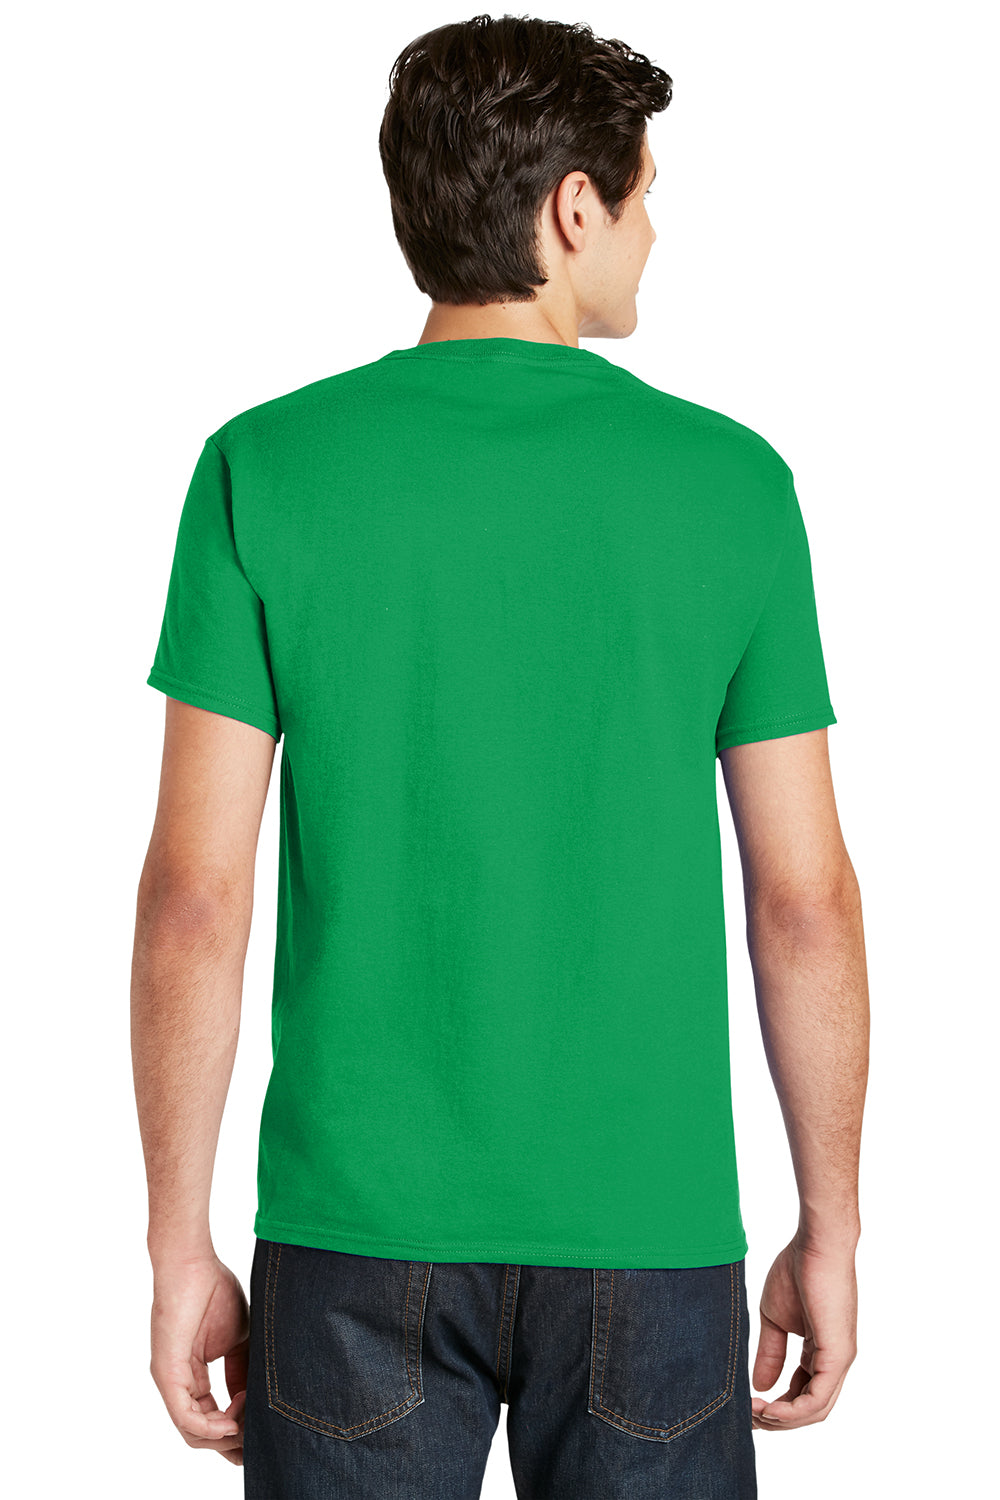 Hanes 5280 Mens ComfortSoft Short Sleeve Crewneck T-Shirt Kelly Green Back